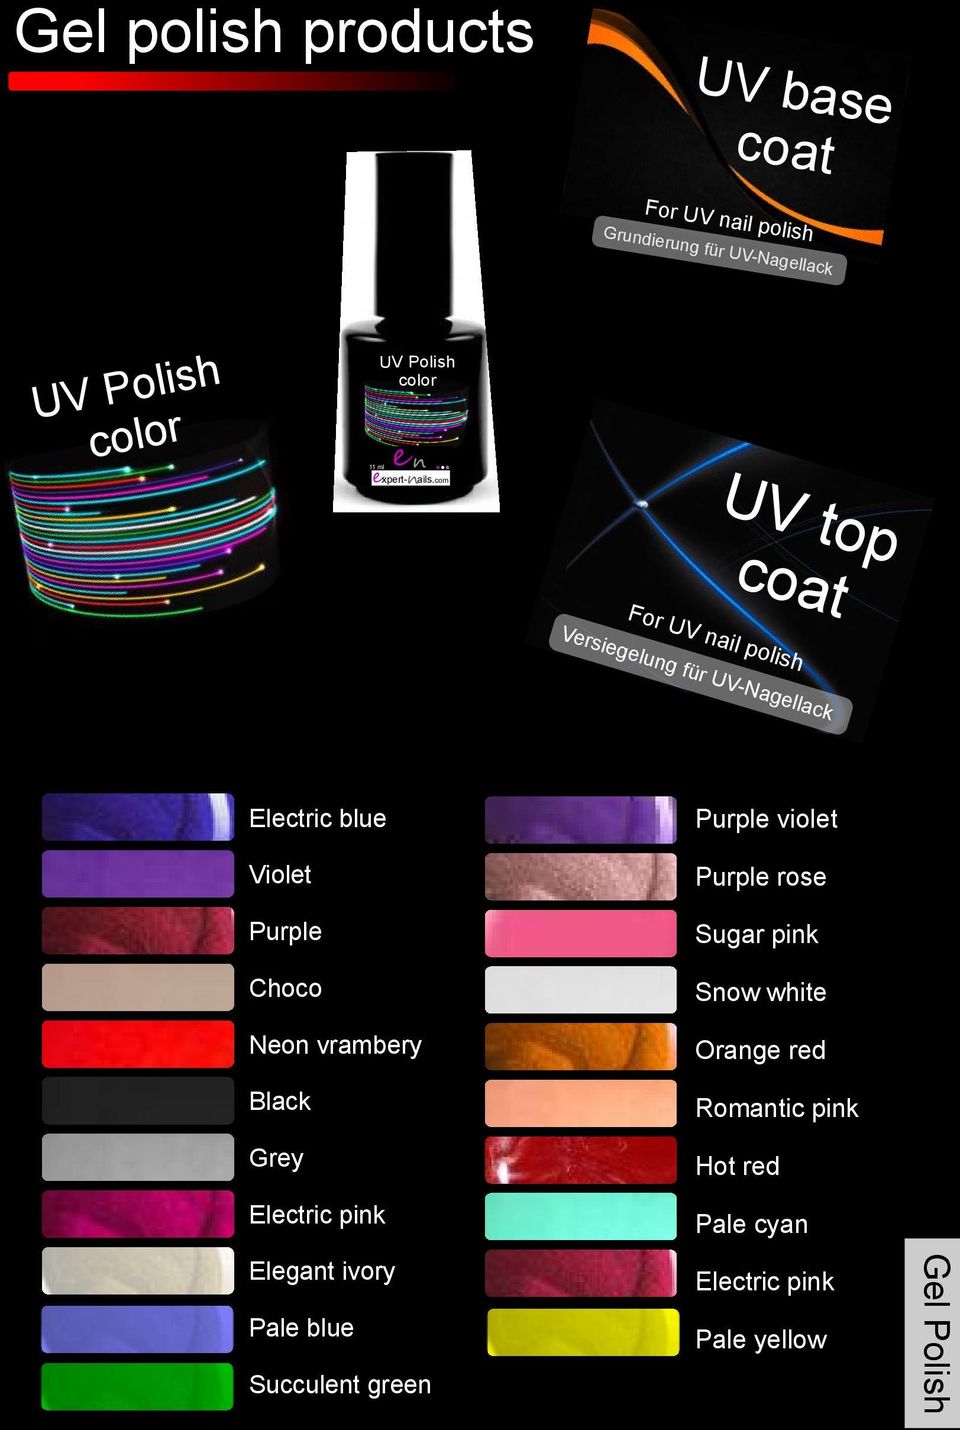 com UV top coat For UV nail polish Versiegelung für UV-Nagellack Electric blue Violet Purple Choco Neon